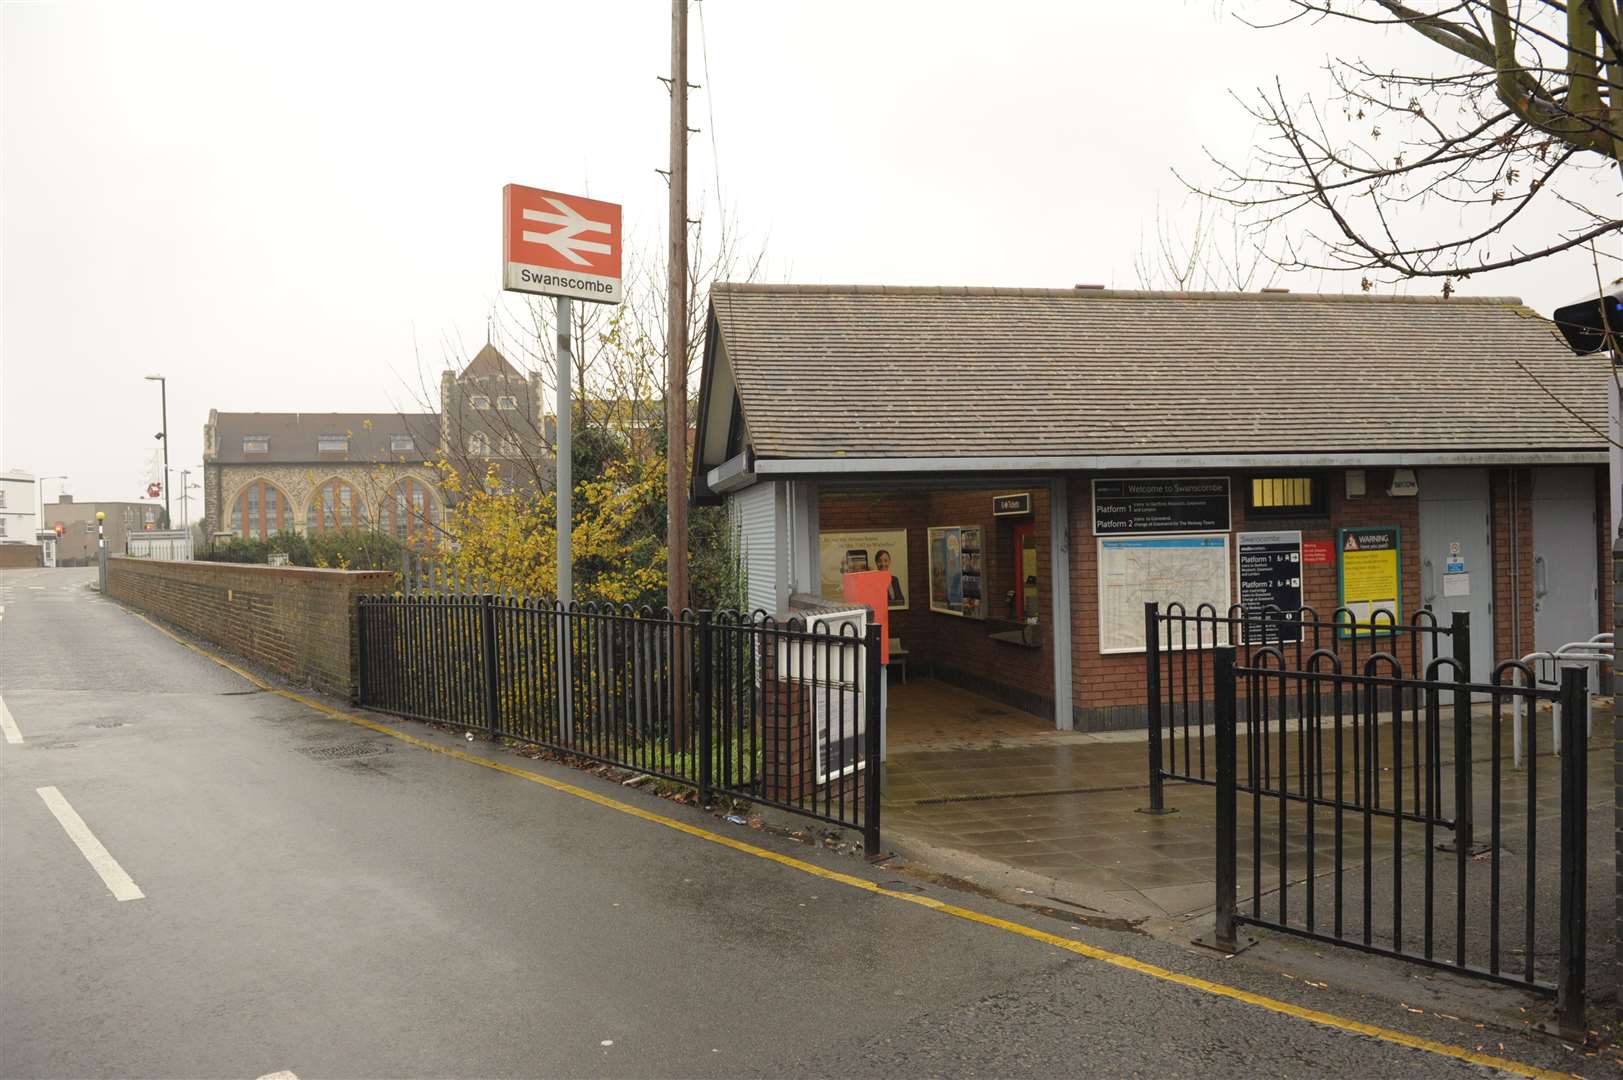 Swanscombe Railway Station